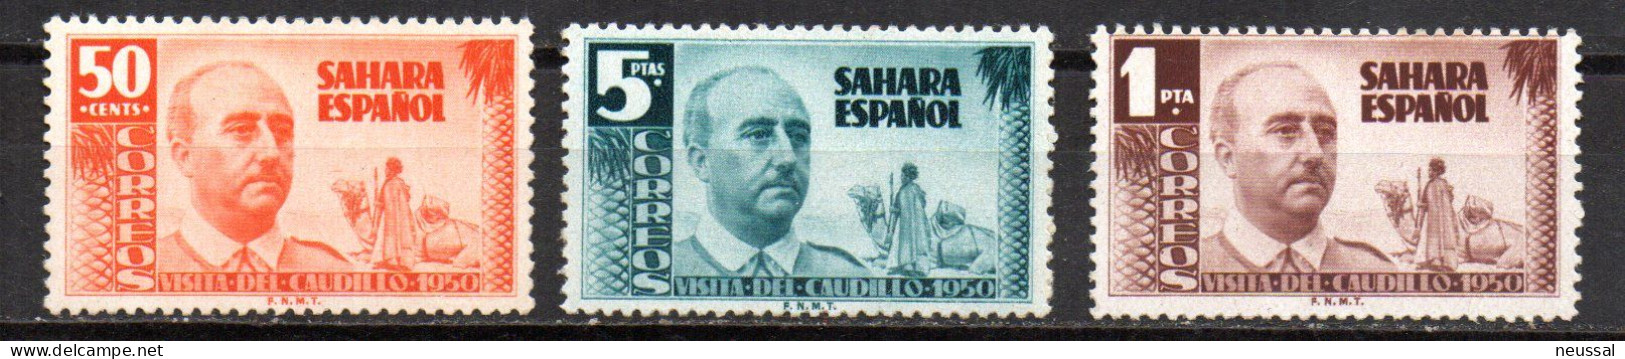 Serie  Nº 88/90  Sahara-. - Sahara Español